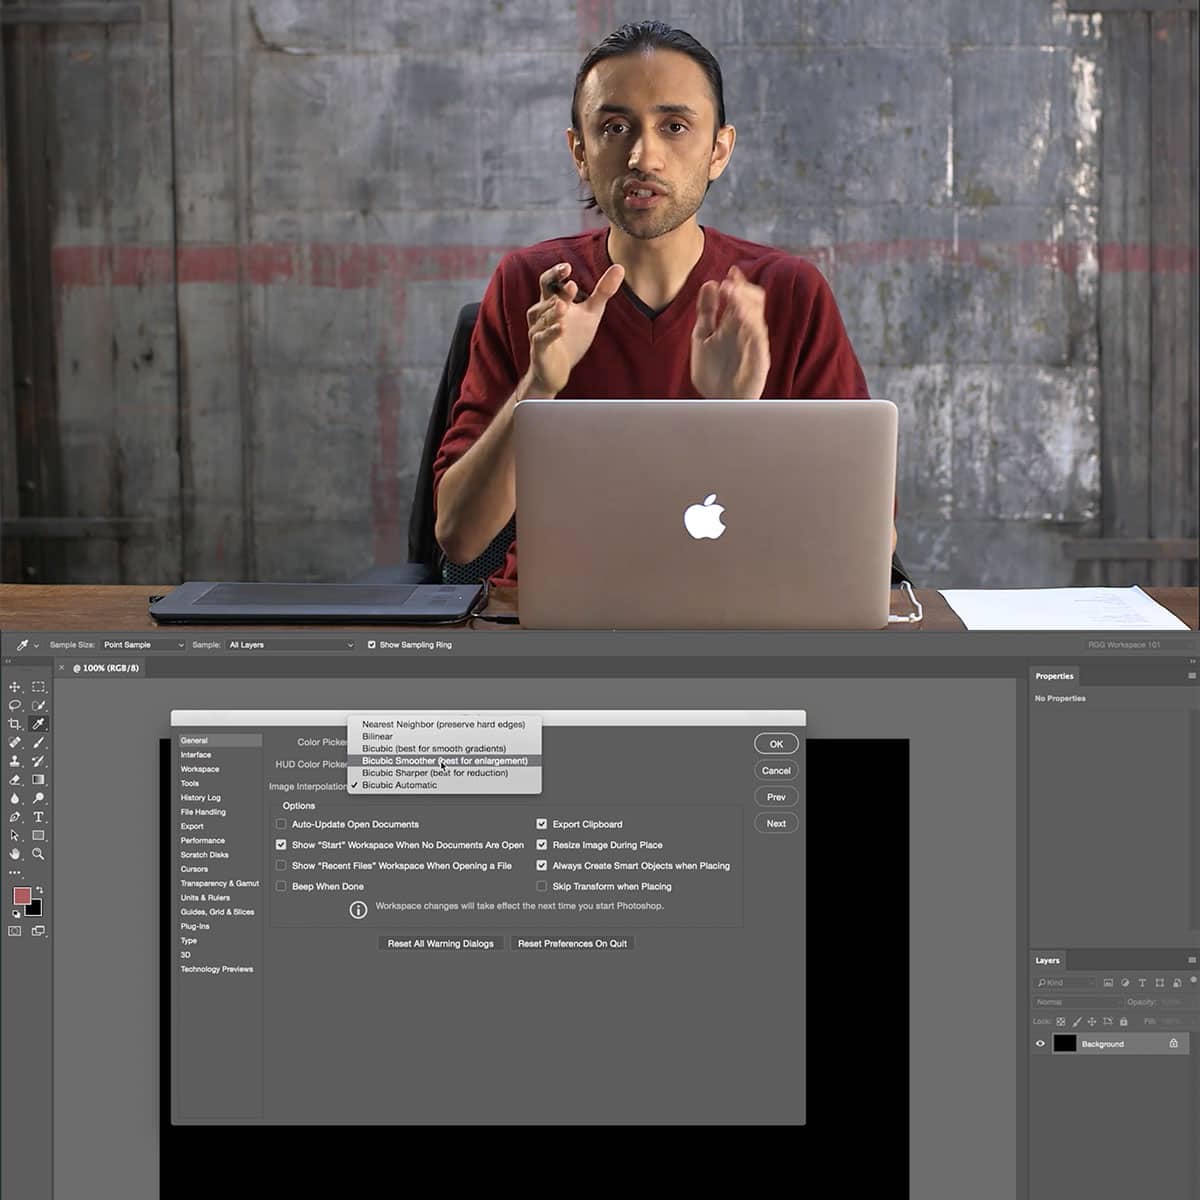 Photoshop Basics Tutorial for Photographers with Pratik Naik Pratik Naik PRO EDU